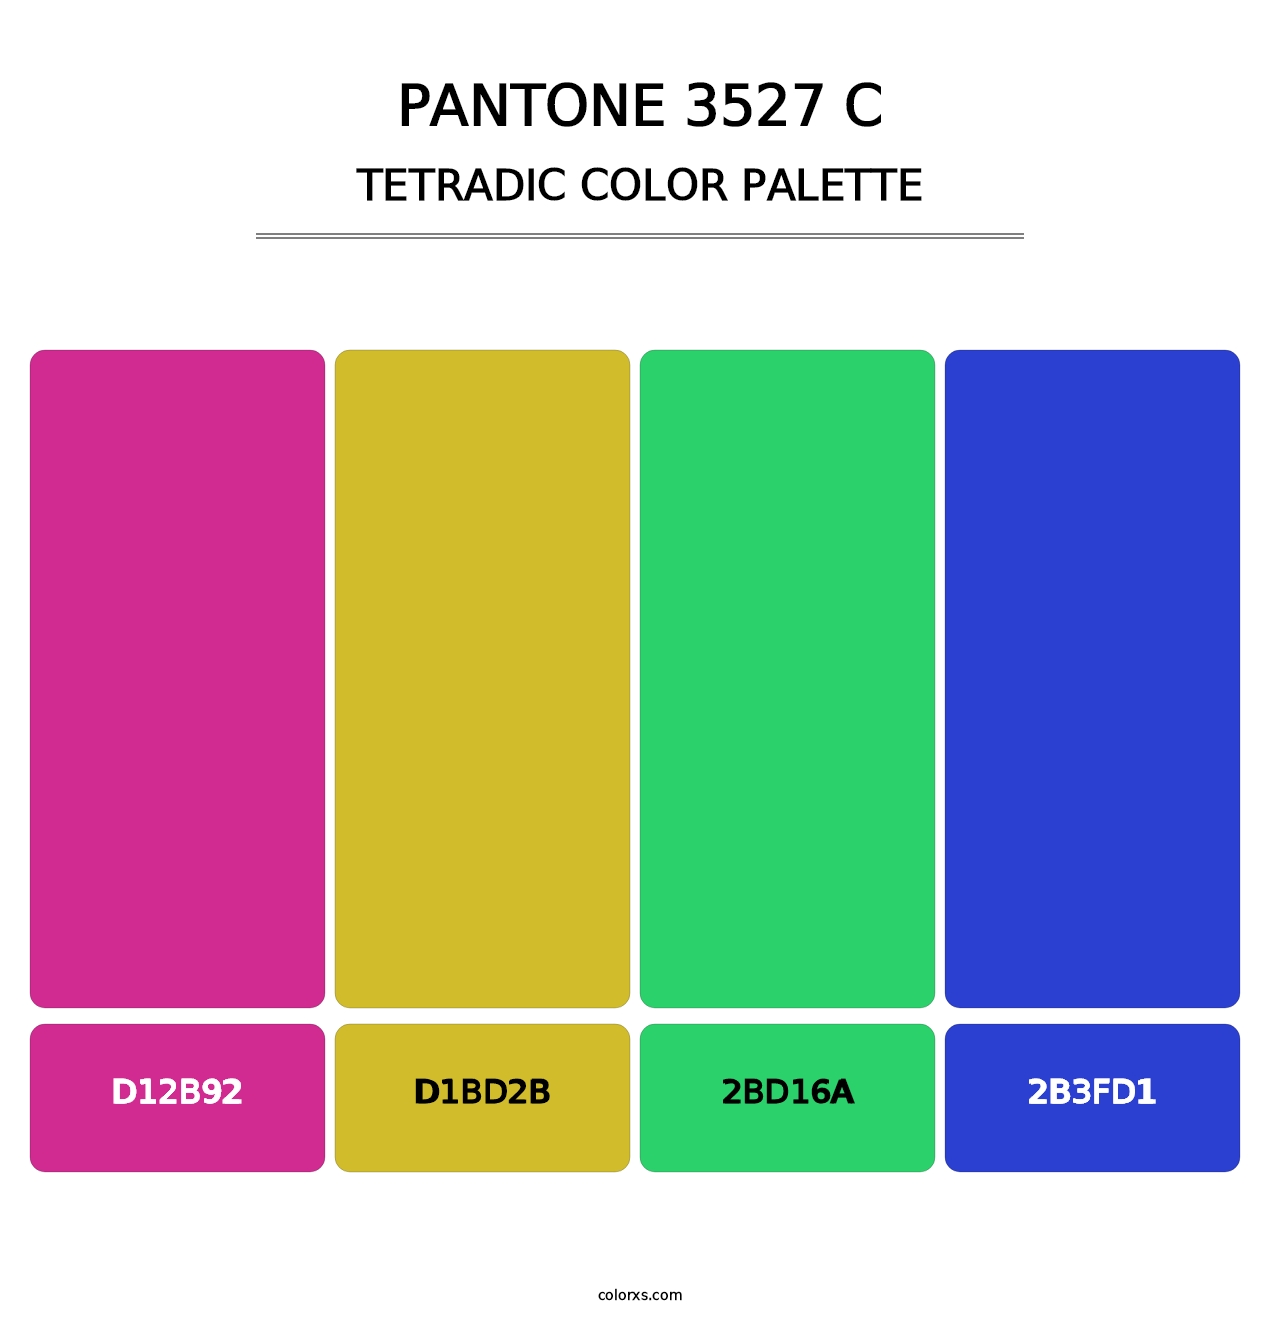 PANTONE 3527 C - Tetradic Color Palette